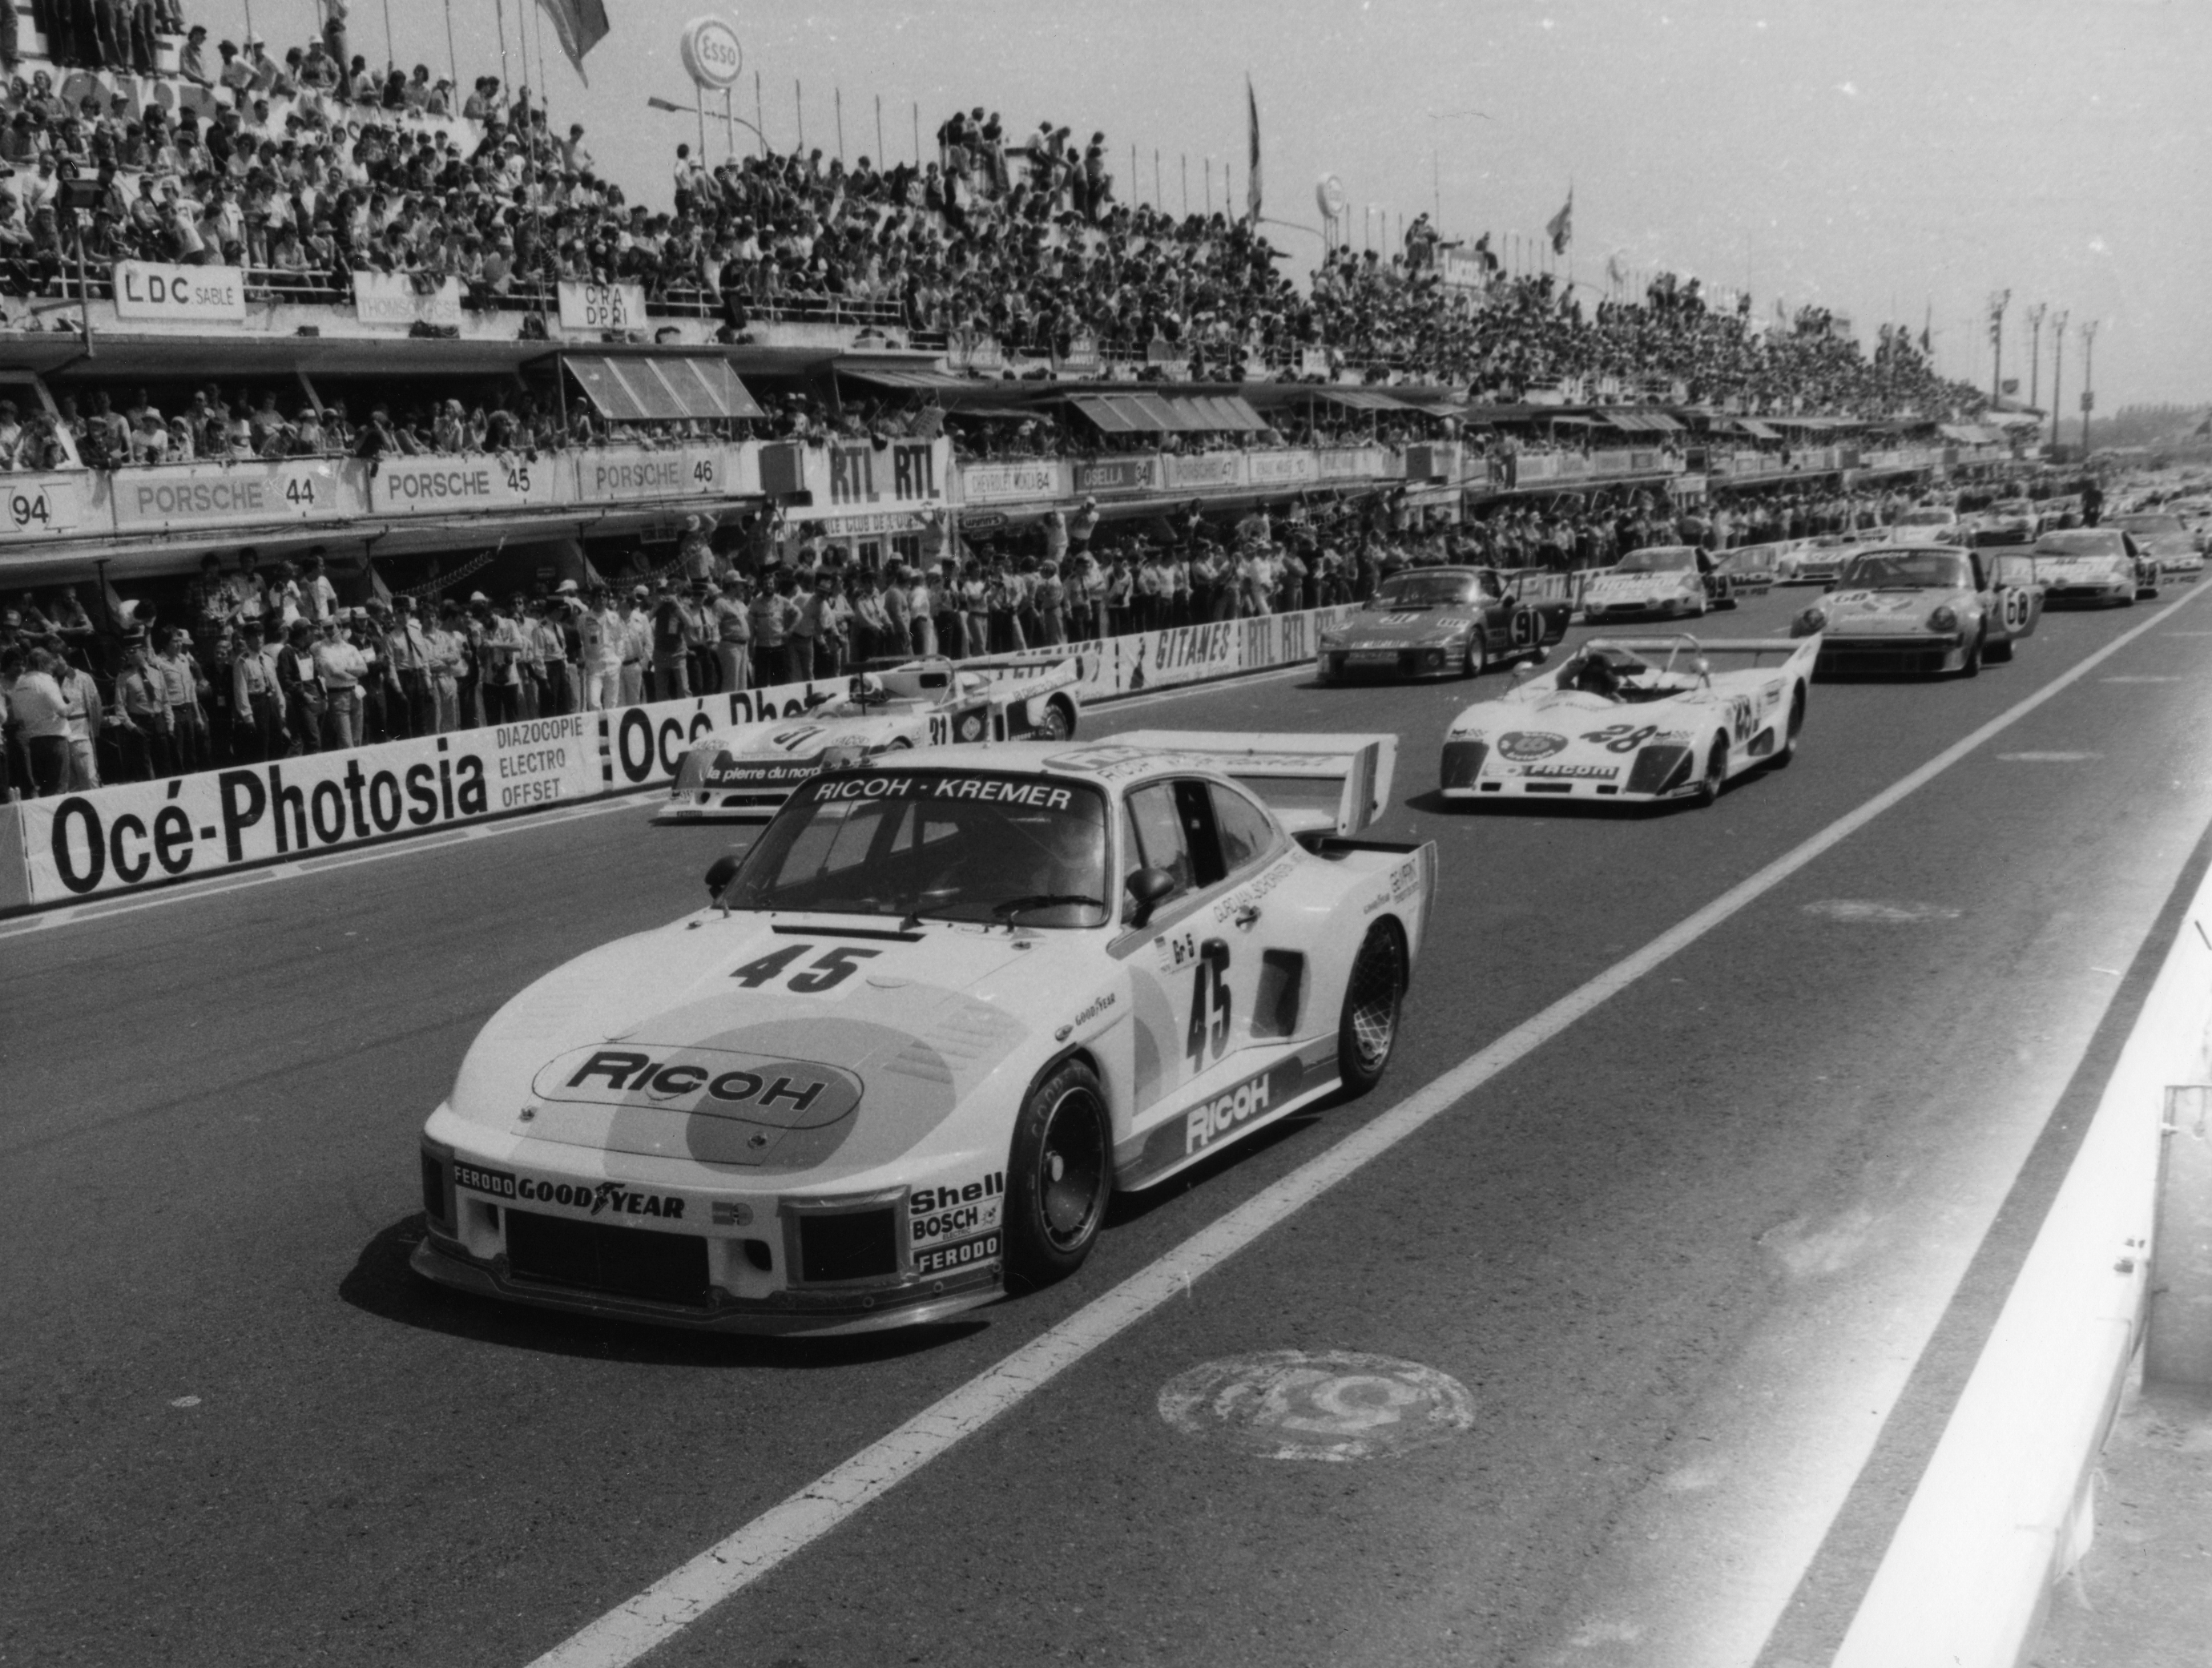 The #45 Porsche 935/77 at the start.